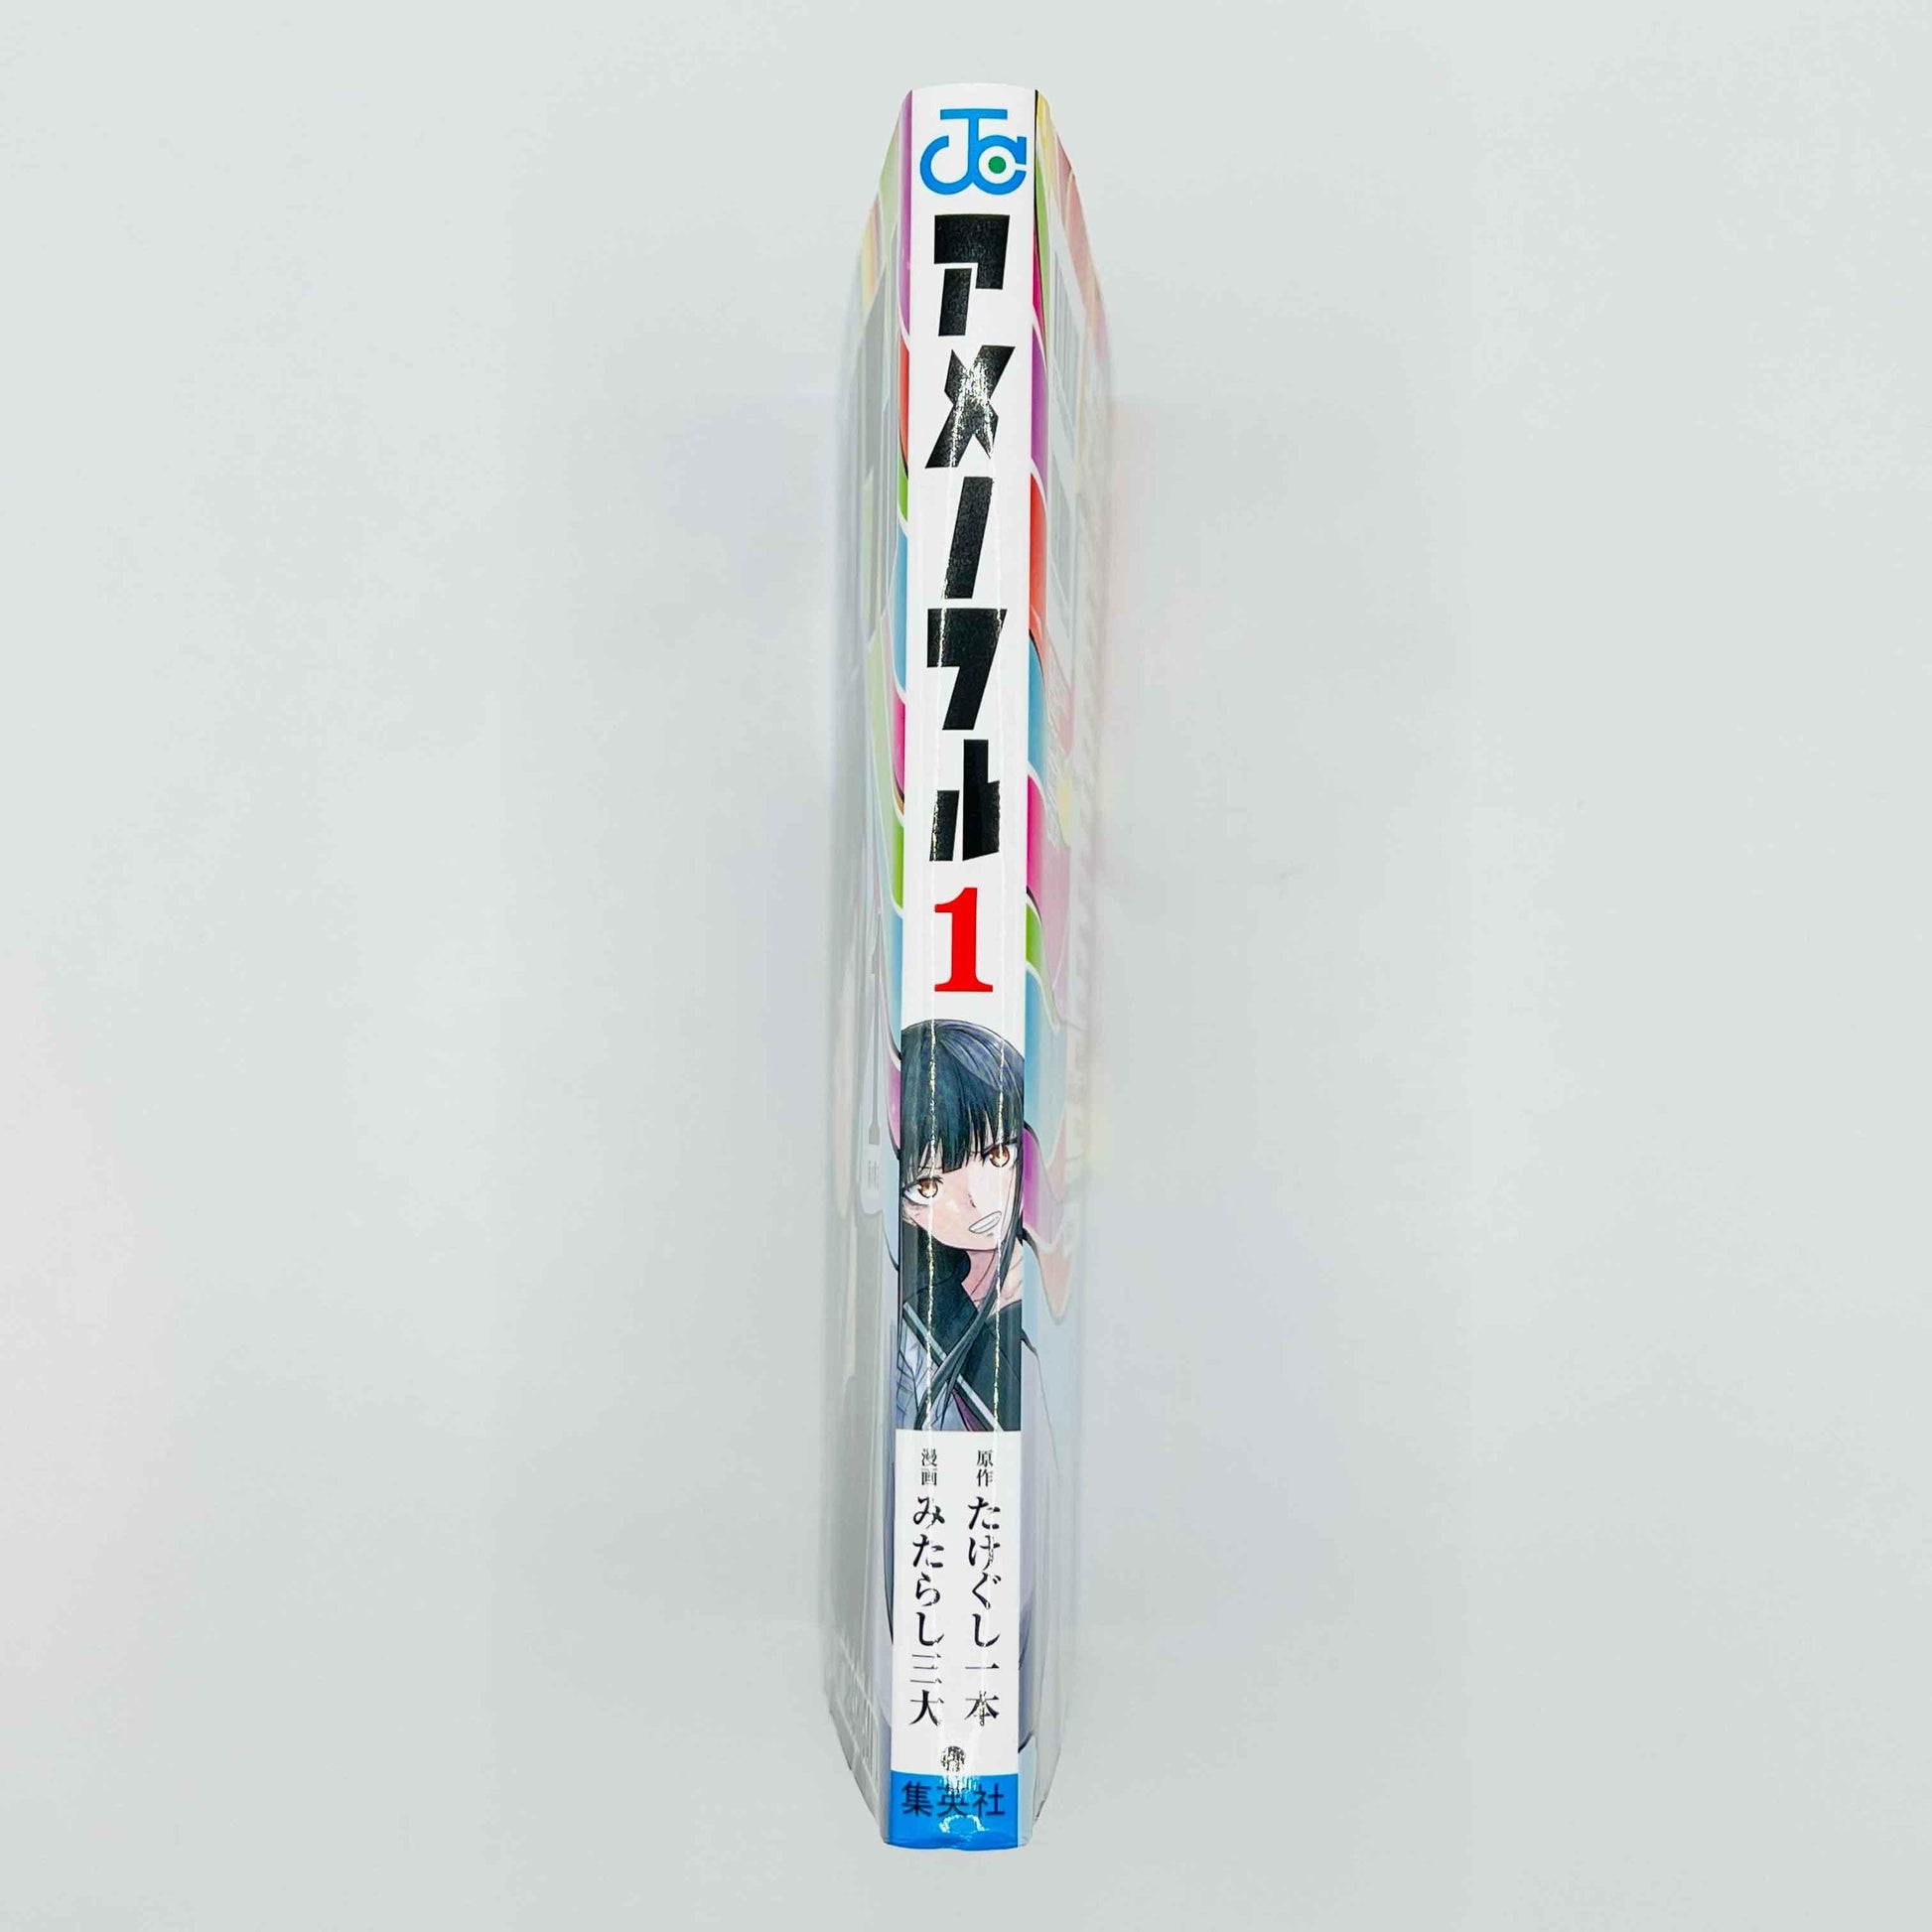 Ame no Furu - Candy Flurry - Volume 01 - 1stPrint.net - 1st First Print Edition Manga Store - M-AMENOFURU-01-001